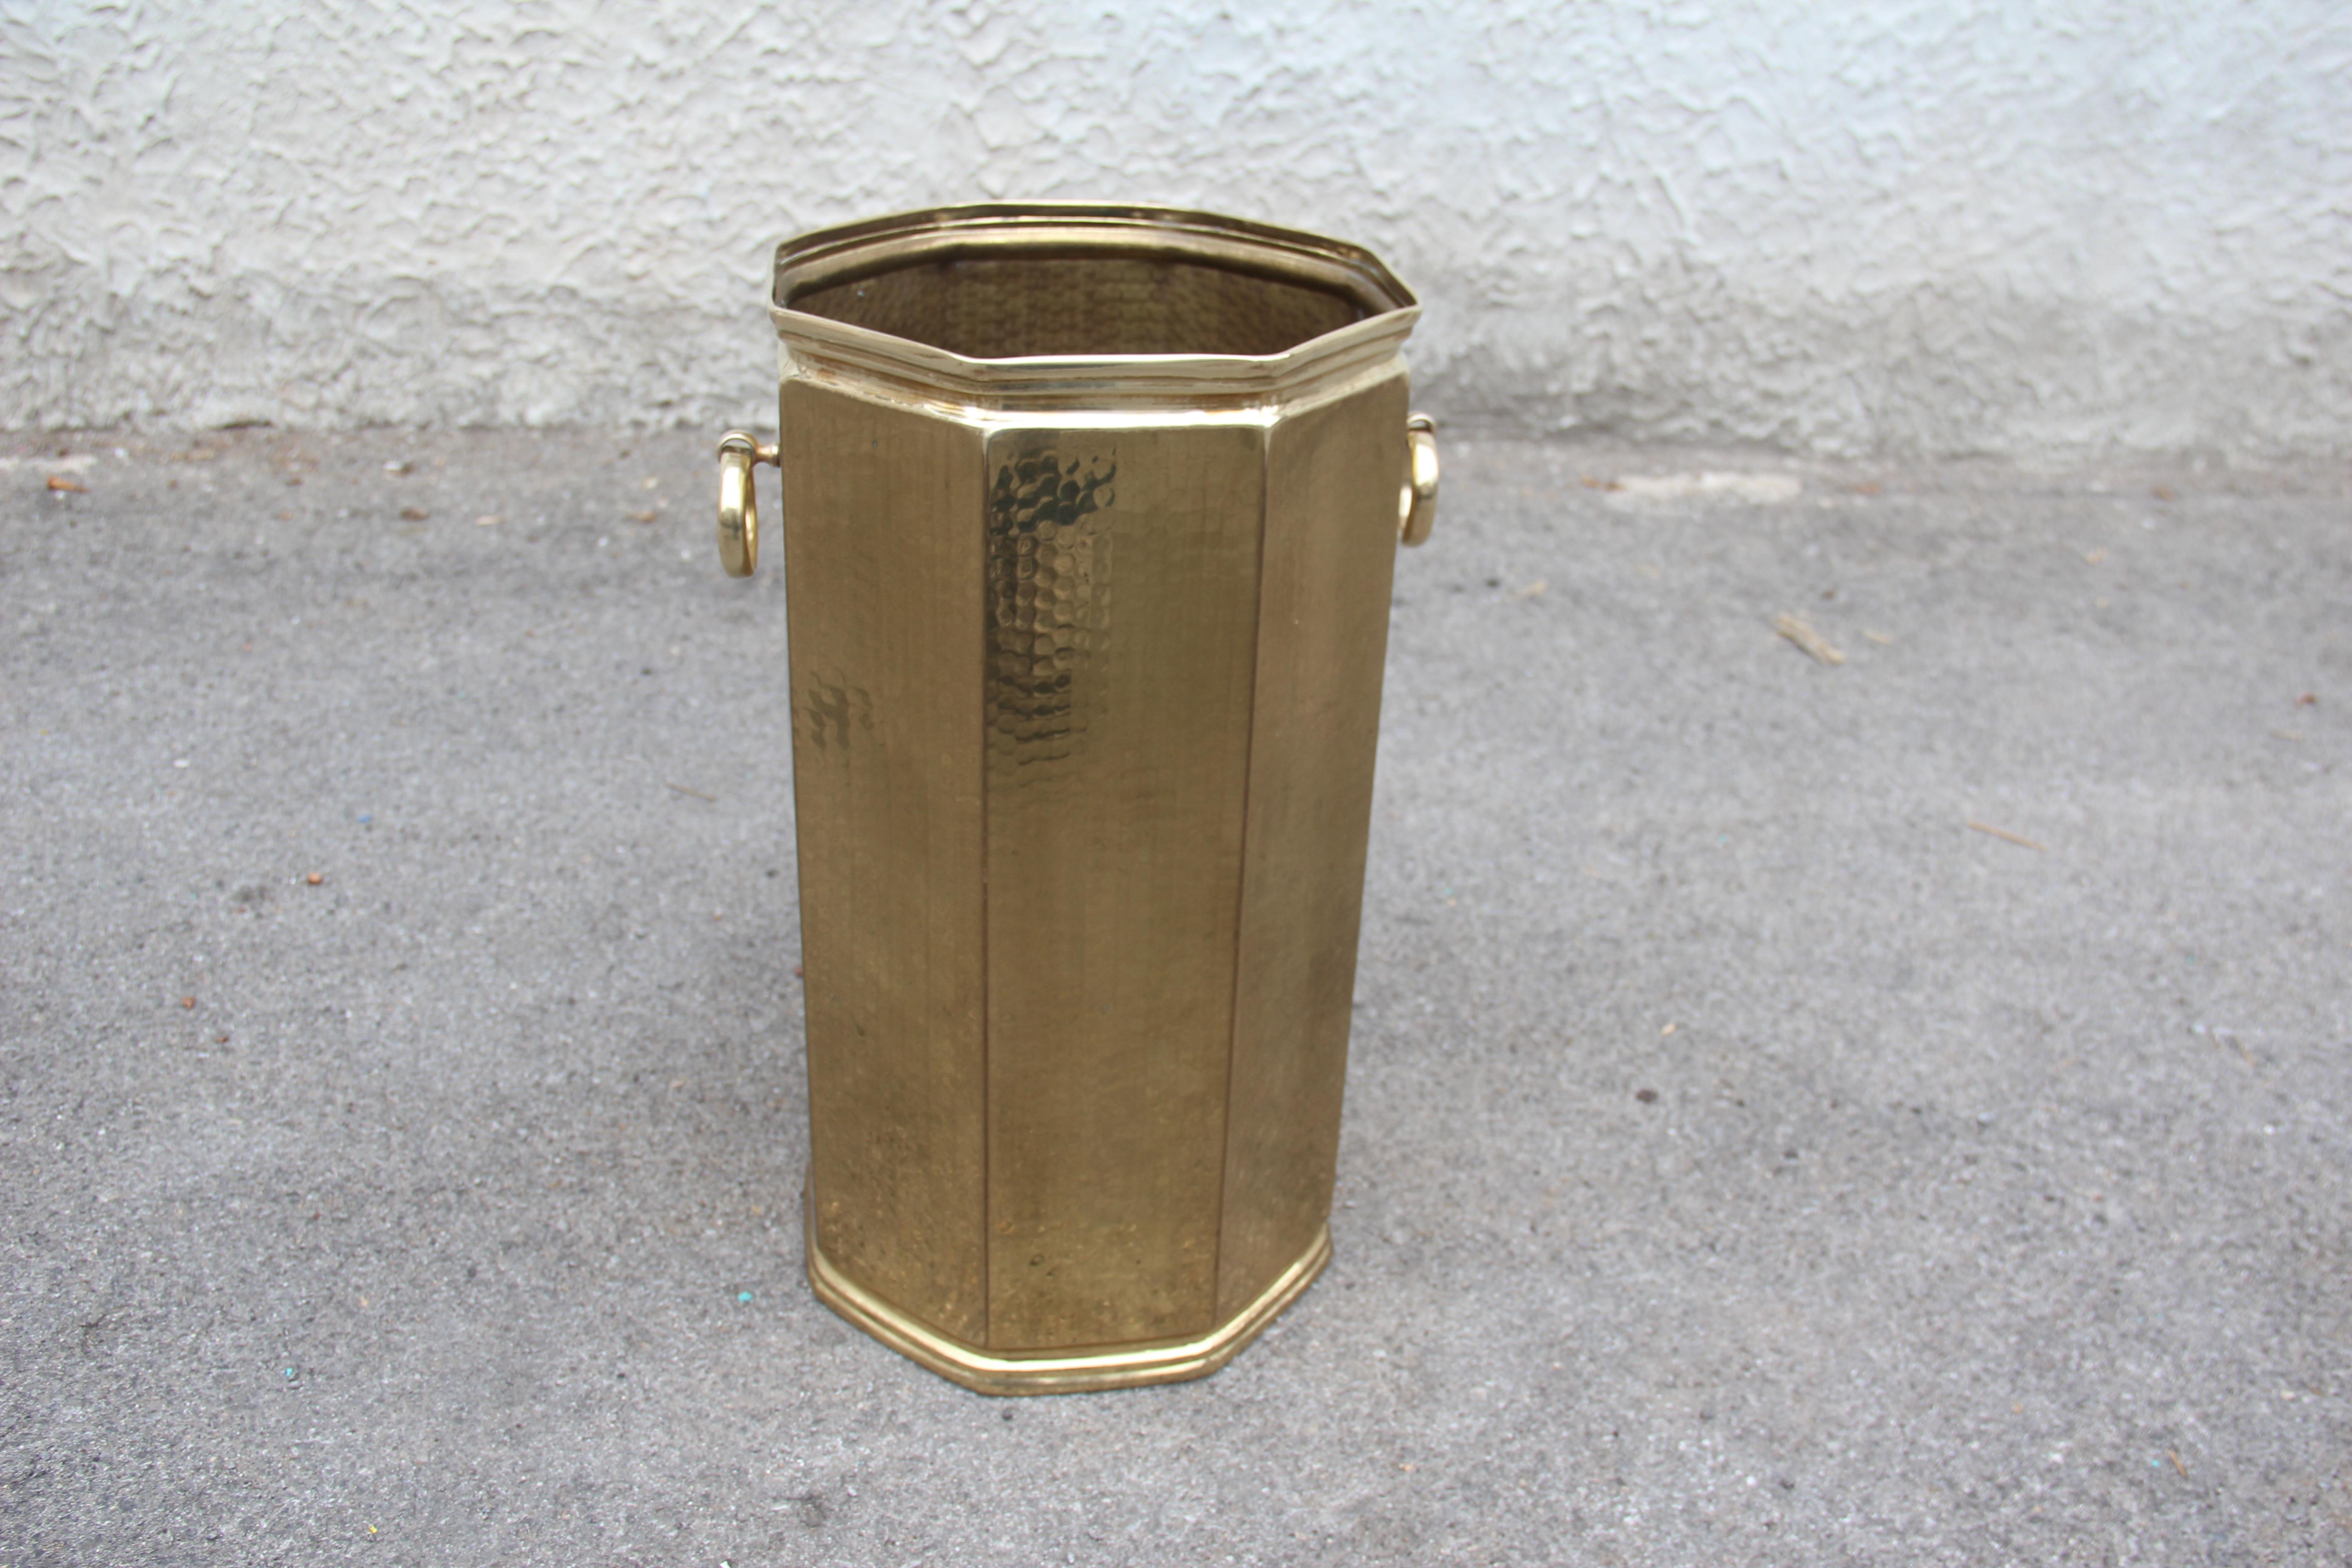 Octagonal golden brass umbrella stand Italian design 1970s hammered.